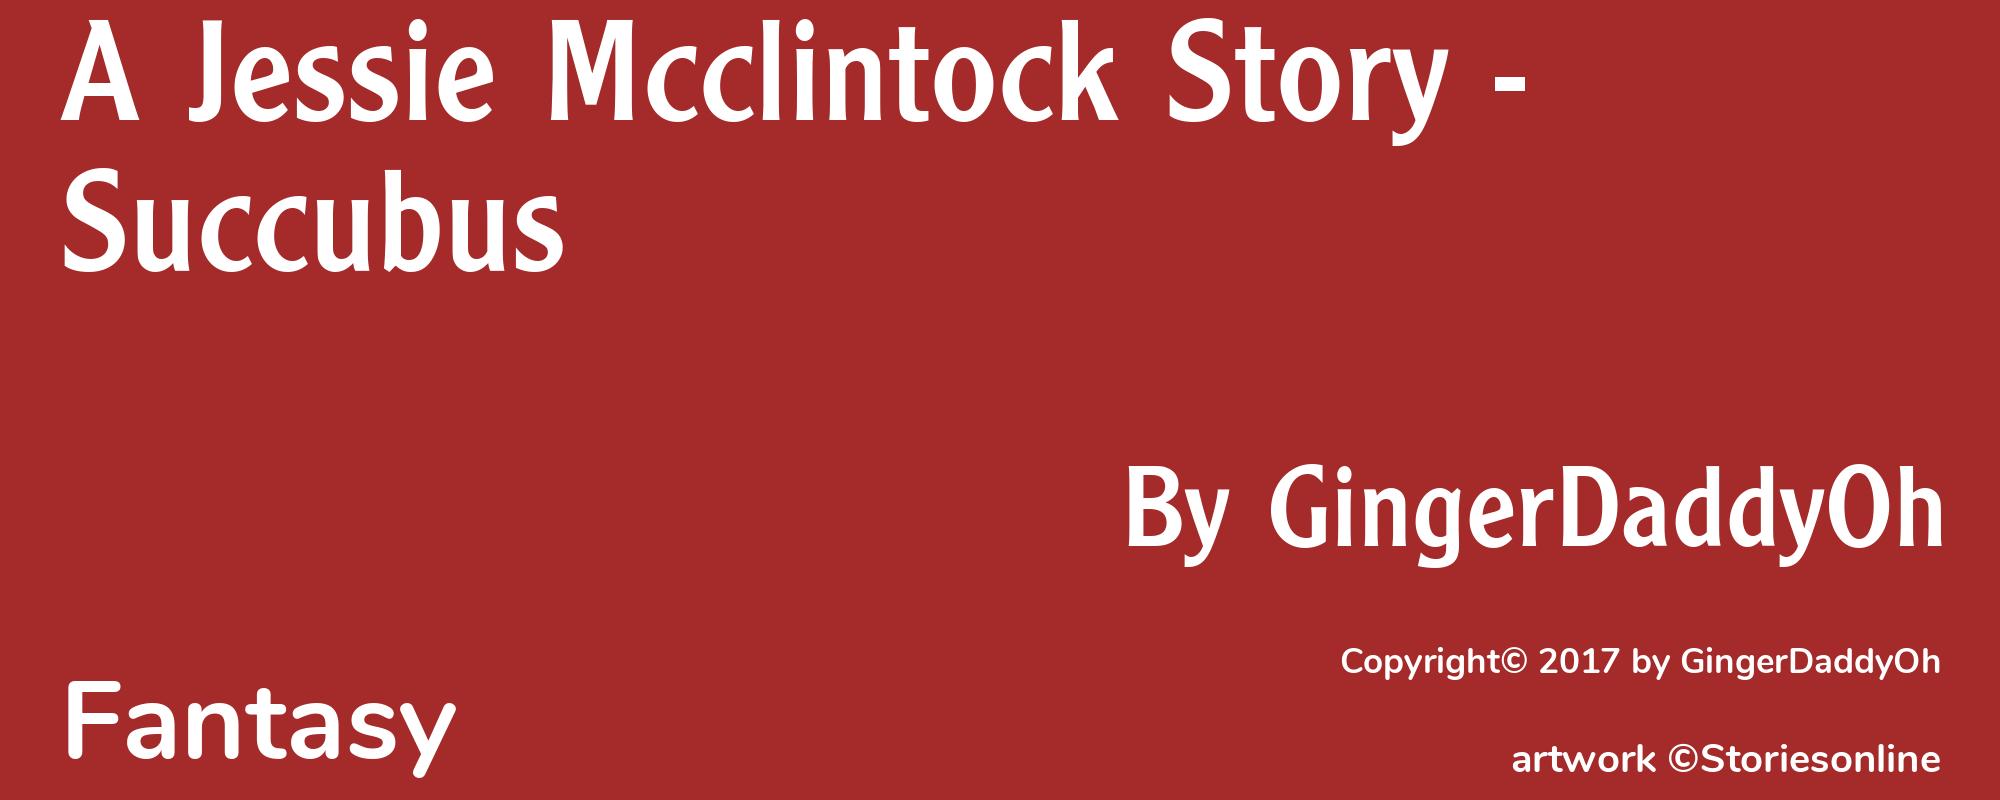 A Jessie Mcclintock Story - Succubus - Cover